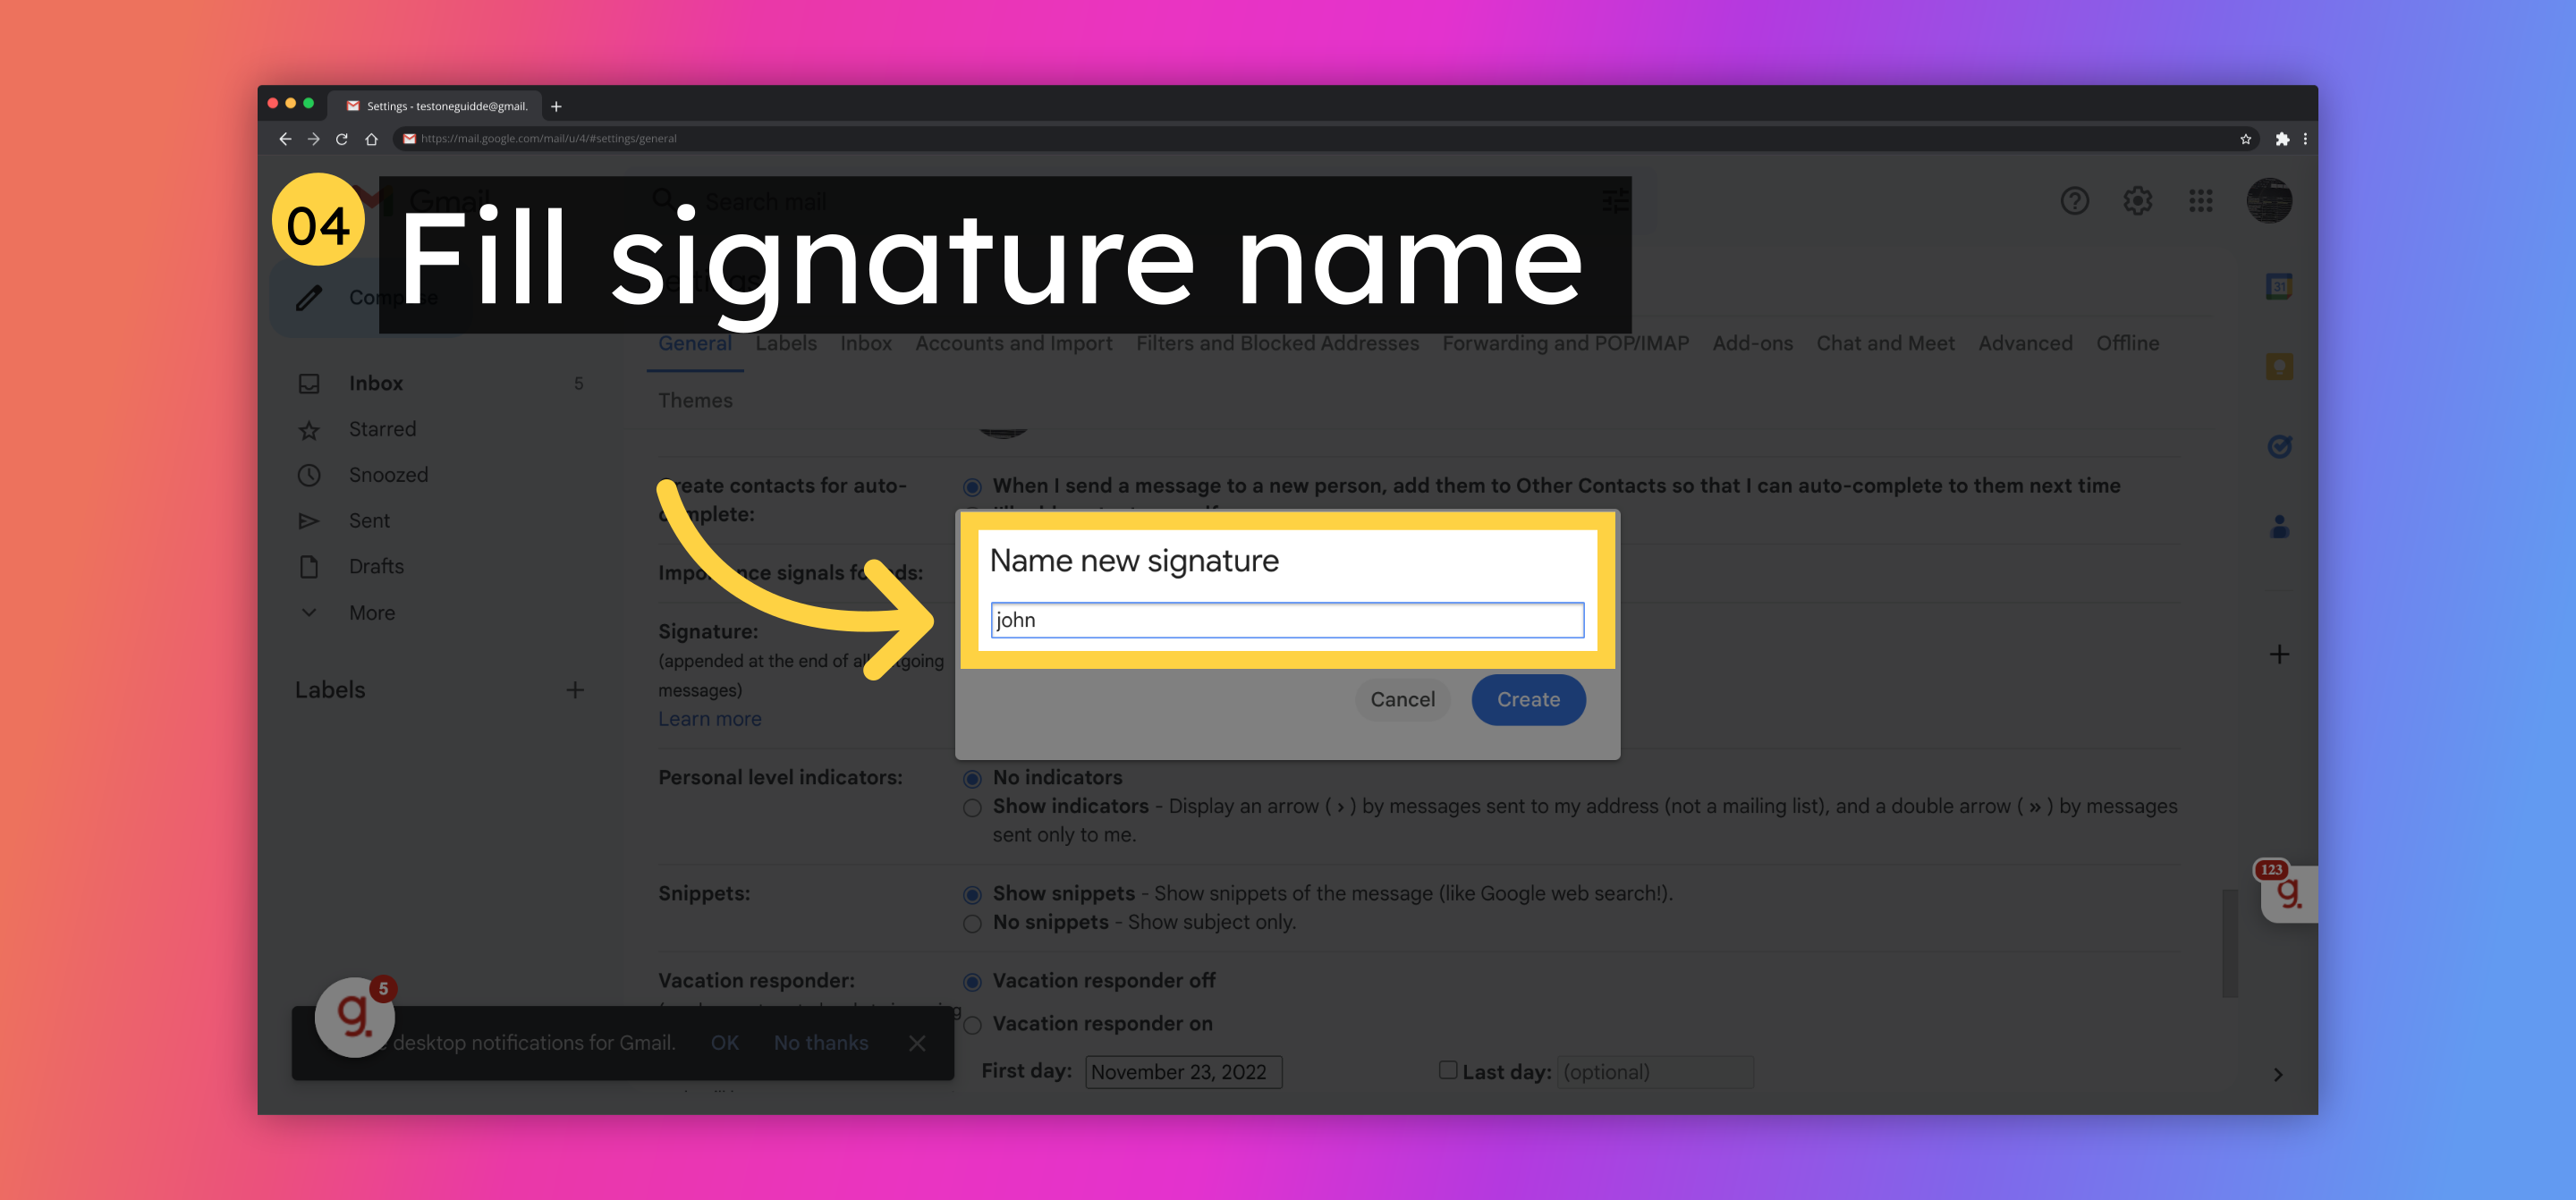 Fill signature name